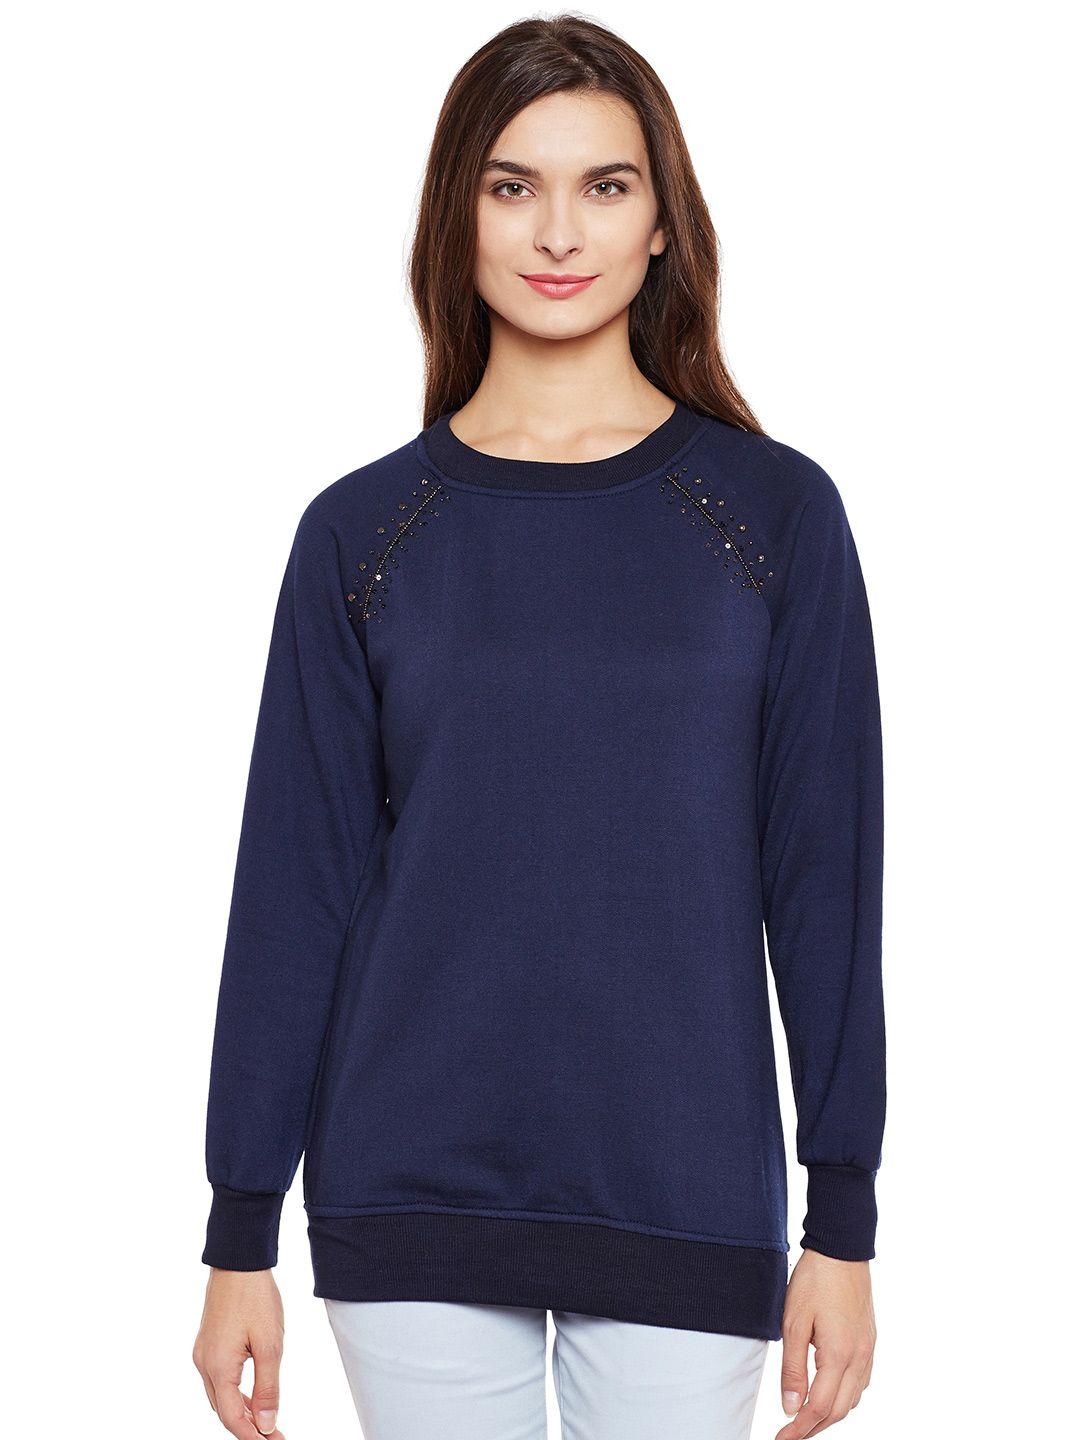 baesd women navy blue sweatshirt